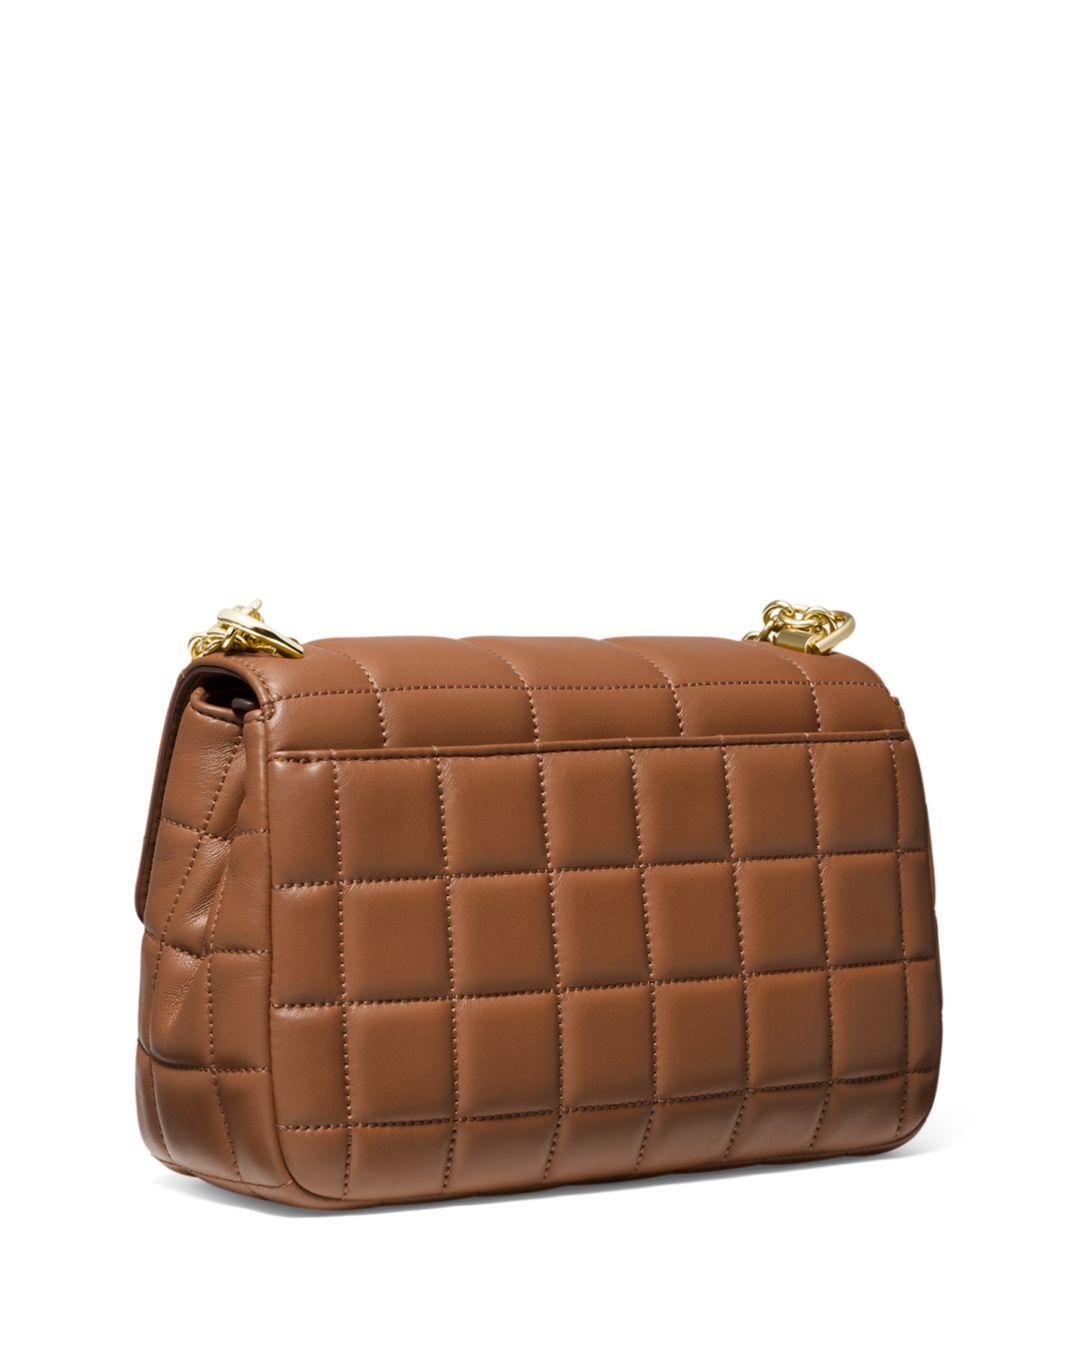 MICHAEL Michael Kors Soho Large Leather Crossbody Bag in Brown | Lyst